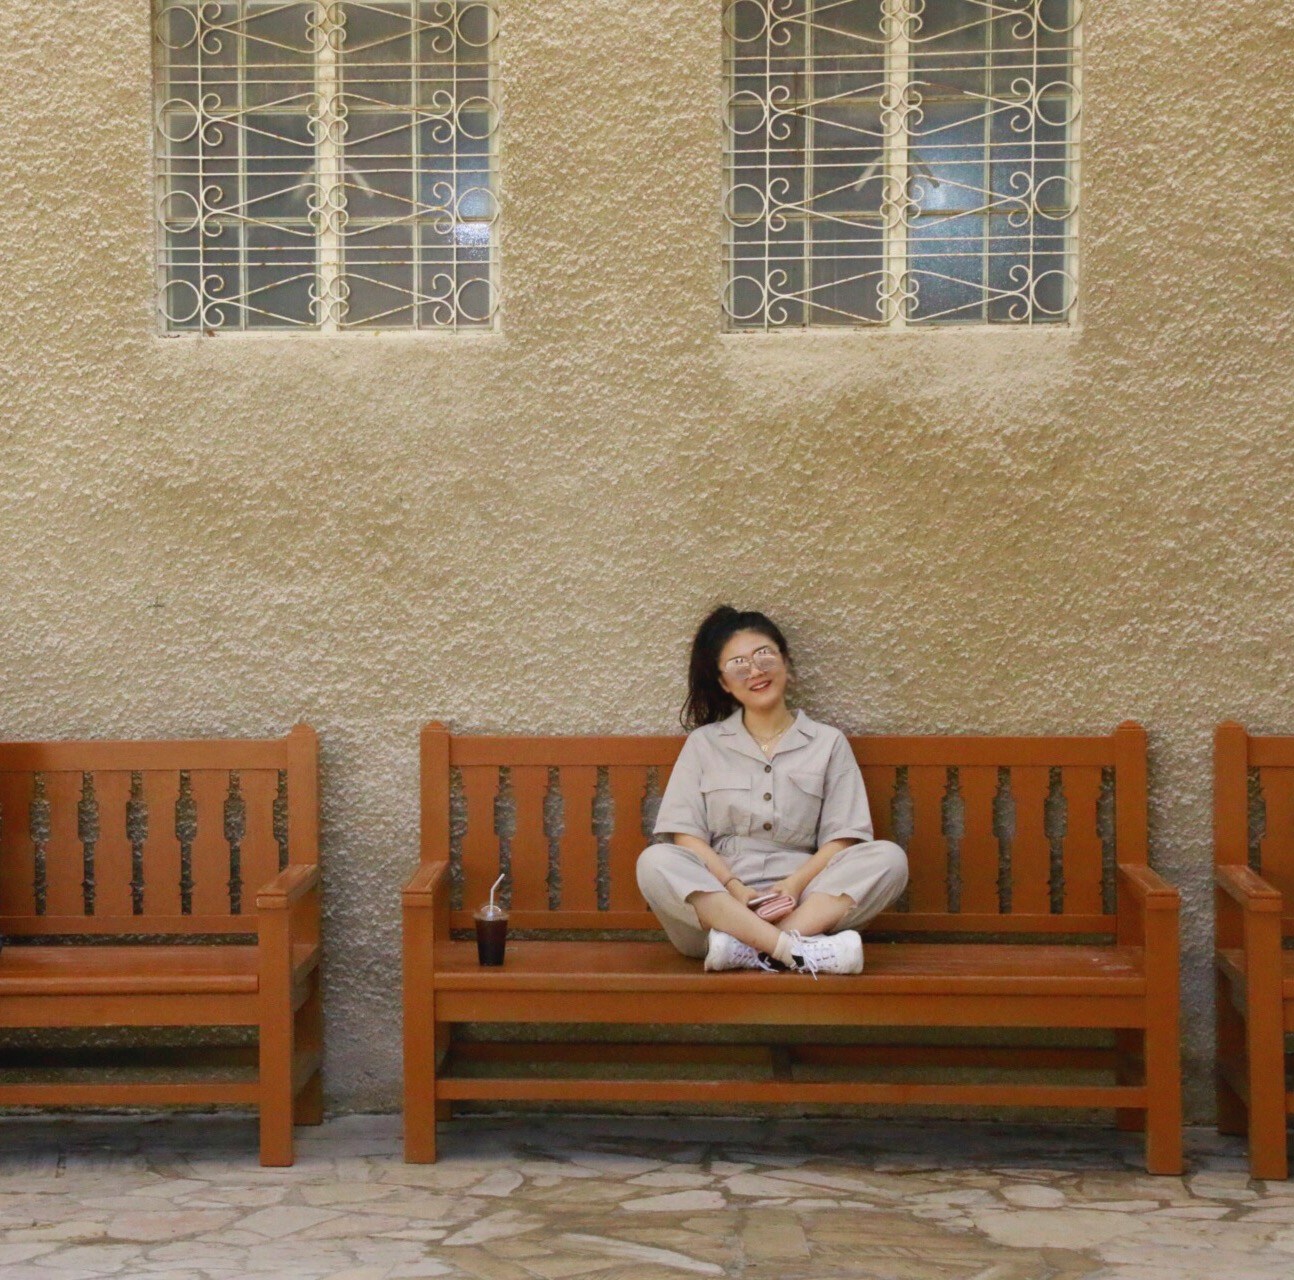 Creative Writing minor Yixuan Cui sitting on a bench, smiling.